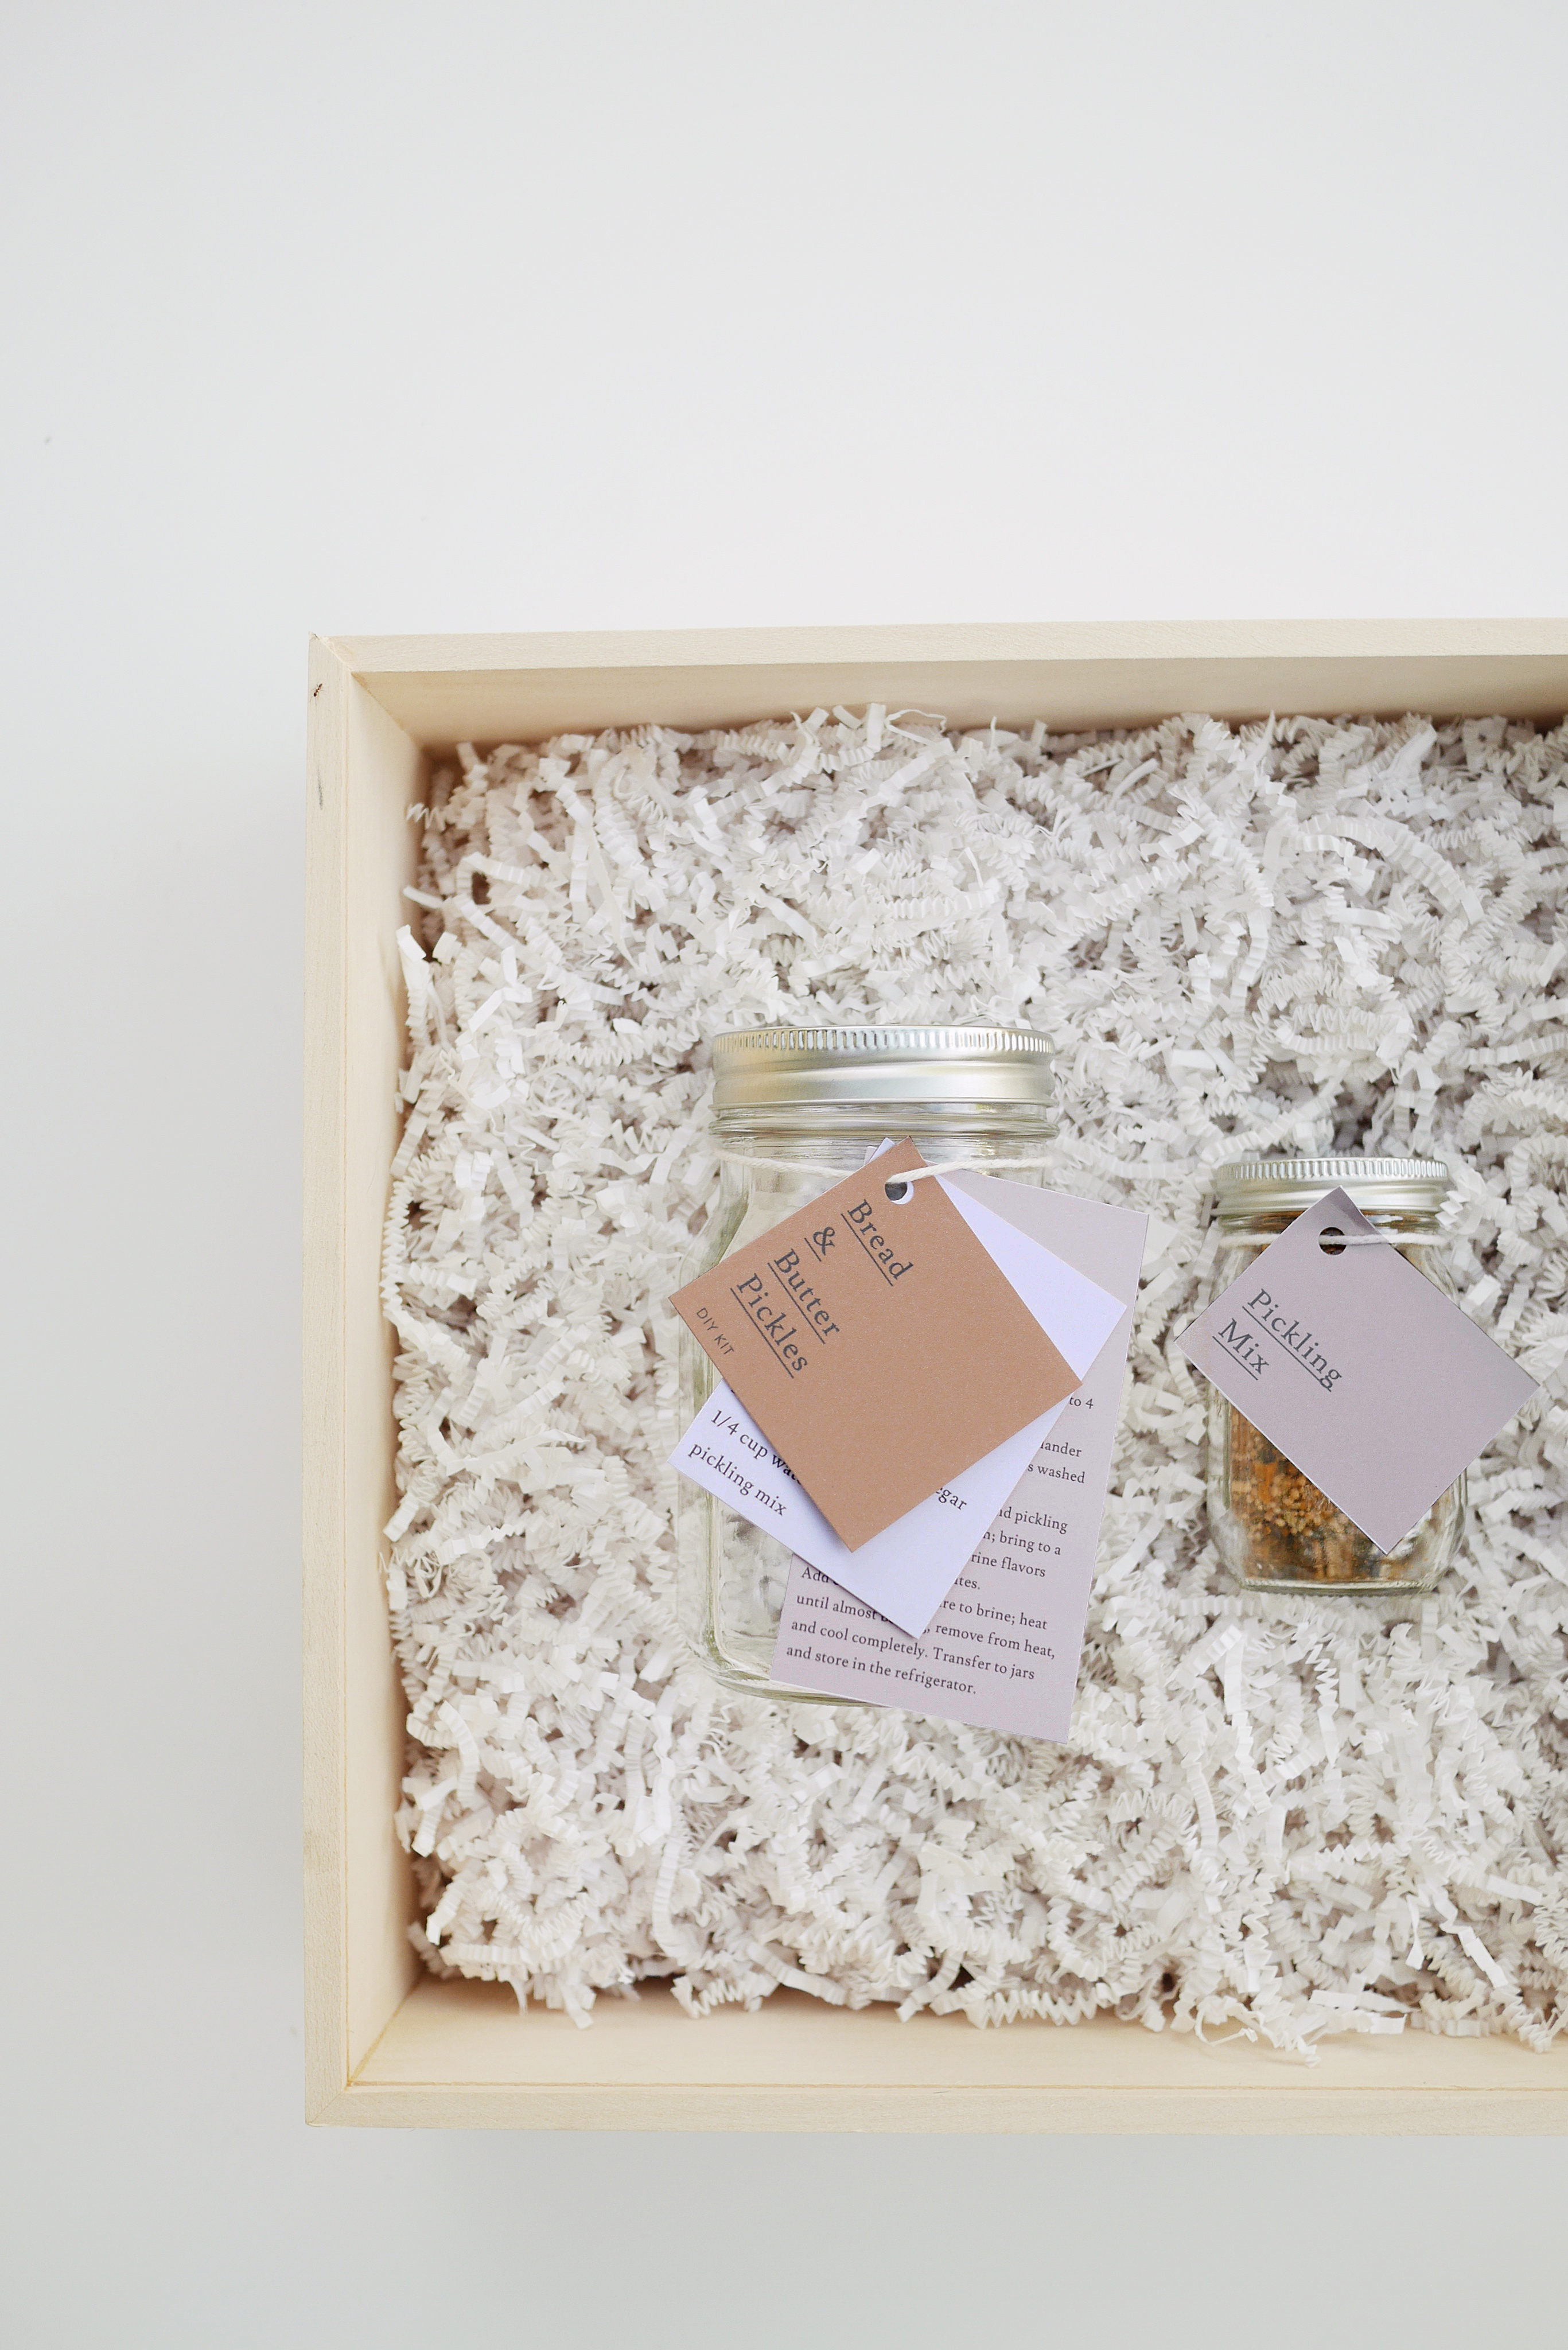 DIY pickling kit gift box – almost makes perfect